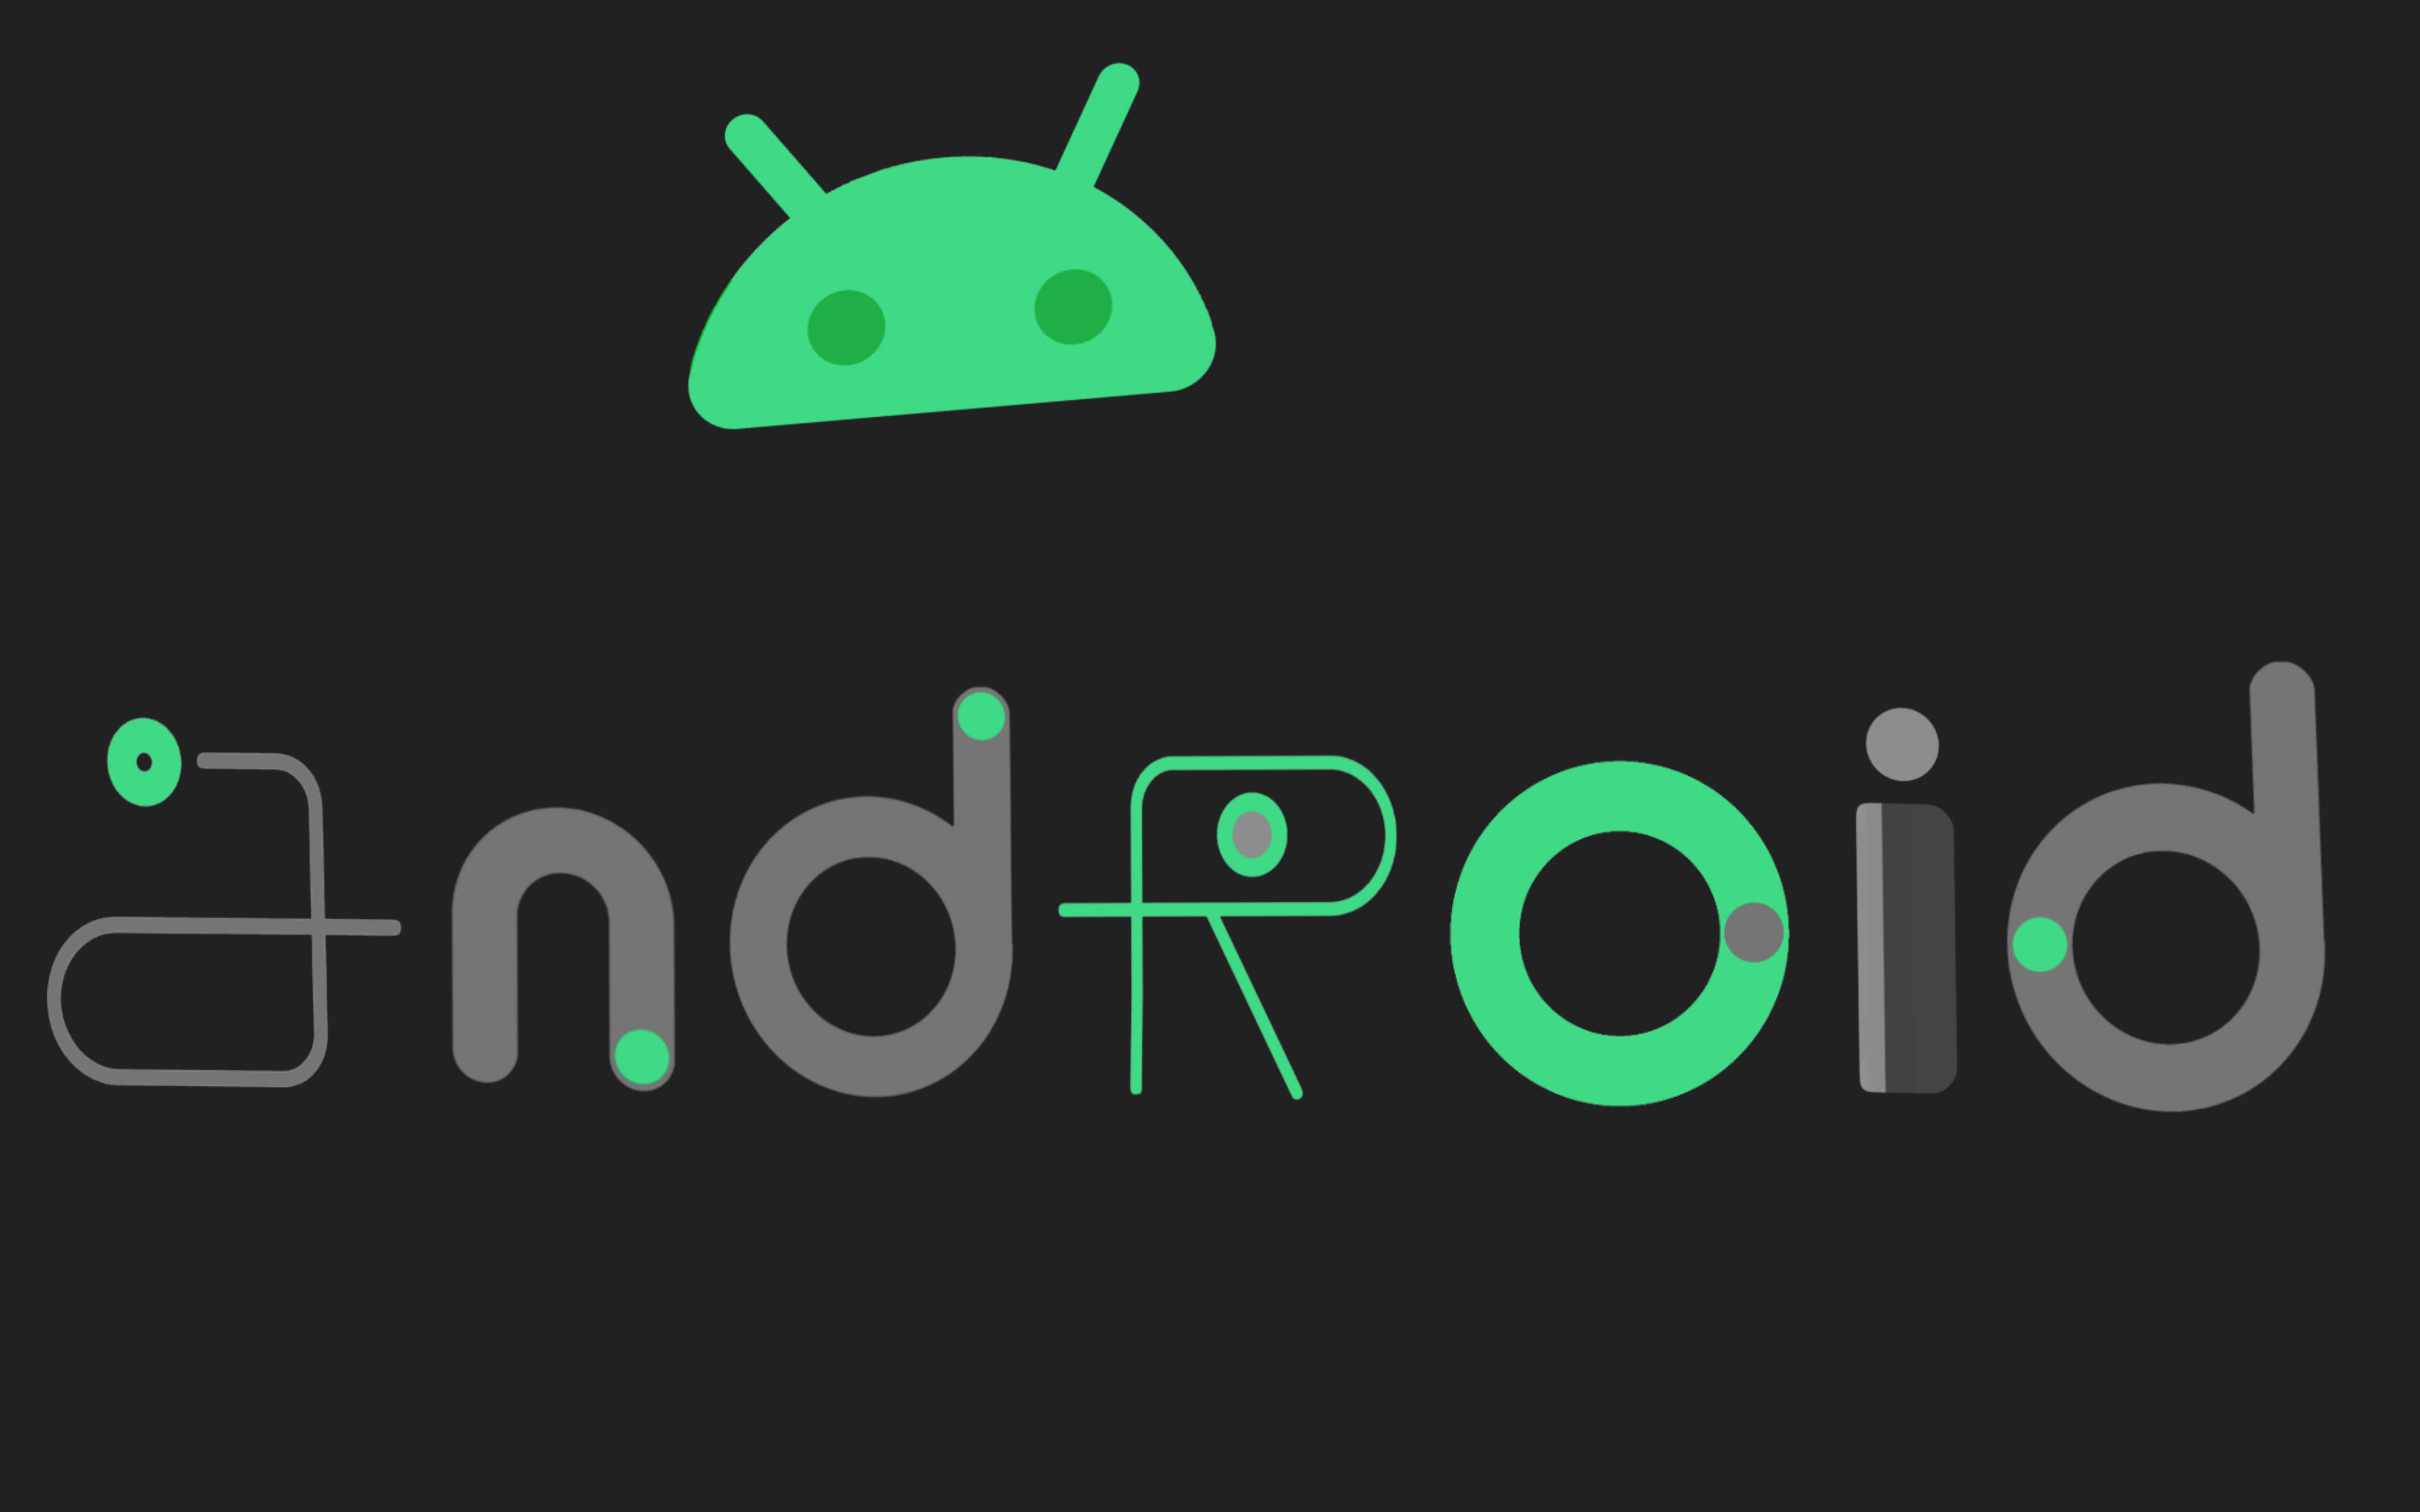 Обои андроида 10. Логотип андроид. Андроид надпись. Обои на андроид с надписями. Обои с надписью Android.